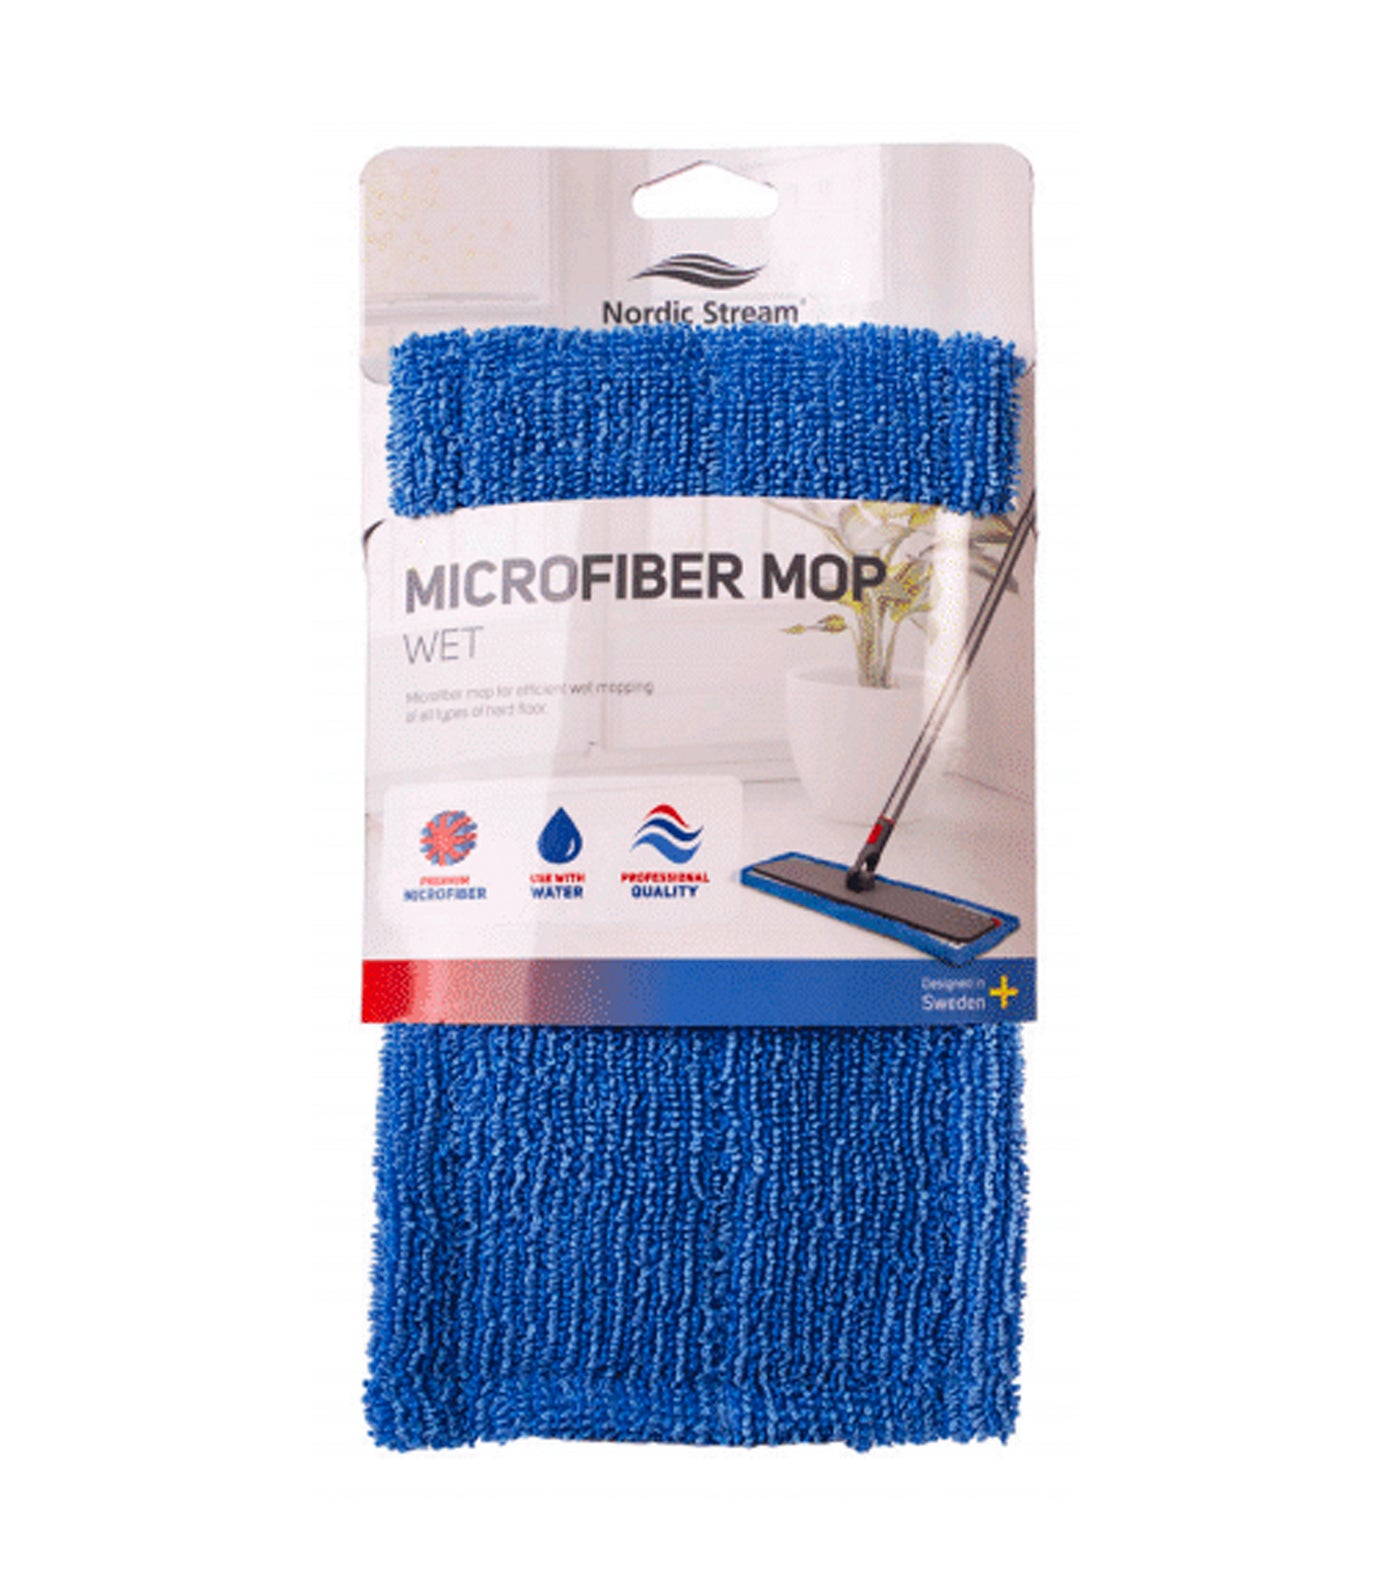 Nordic Stream Microfiber Mop Refill